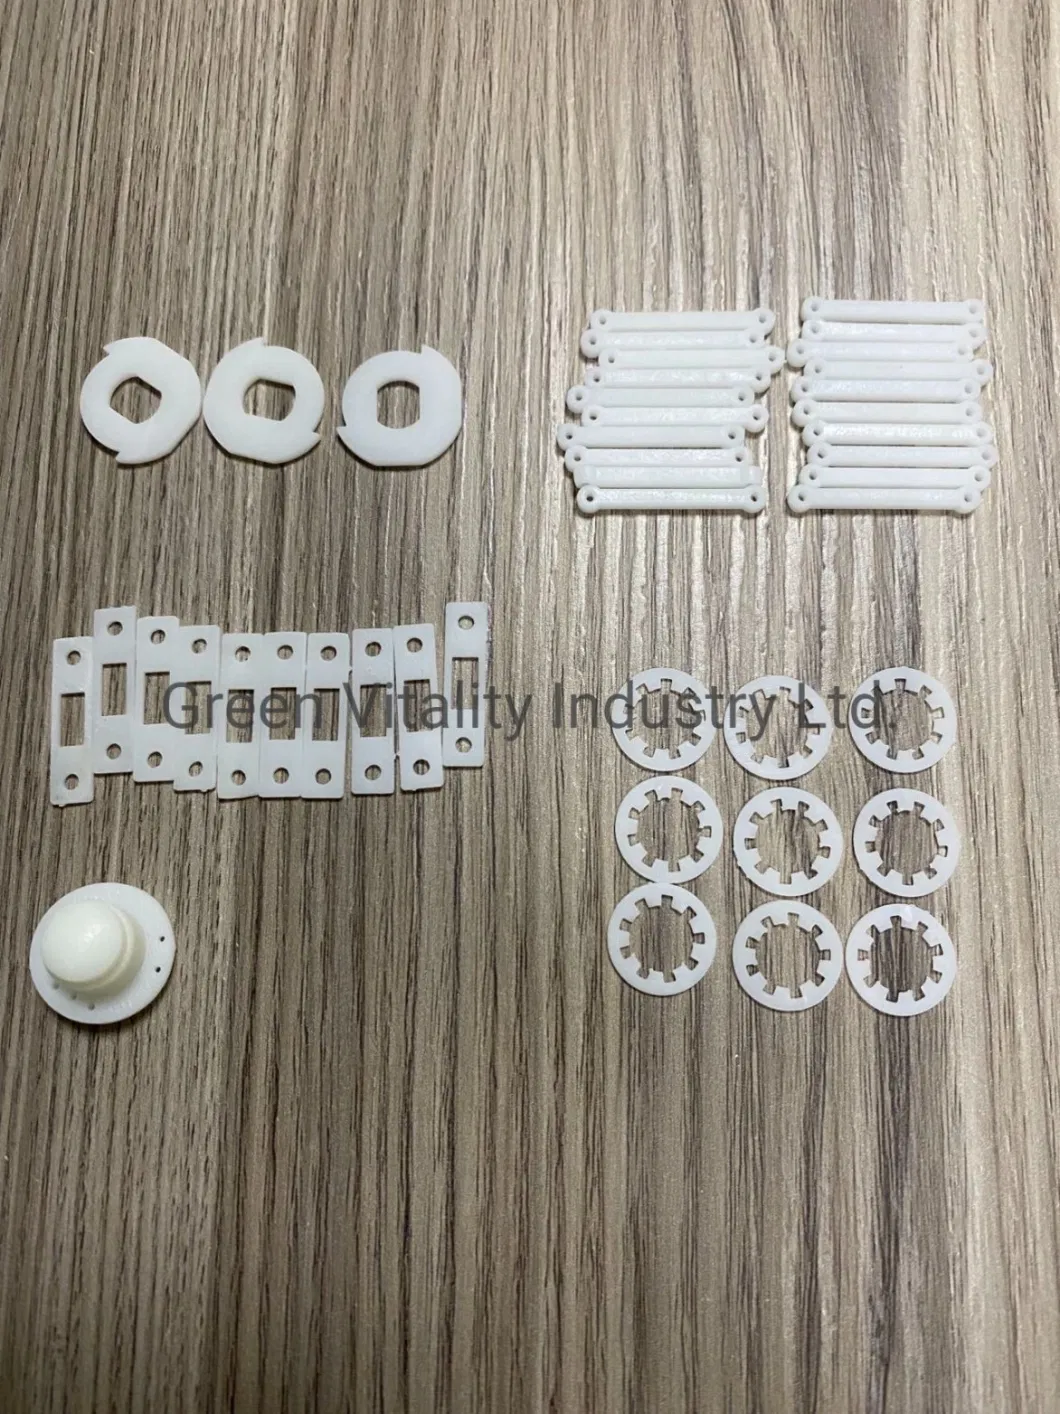 Rapid 3D Printing Prototype -3D Printing Model Mockup- Vacuum Silicone Replica